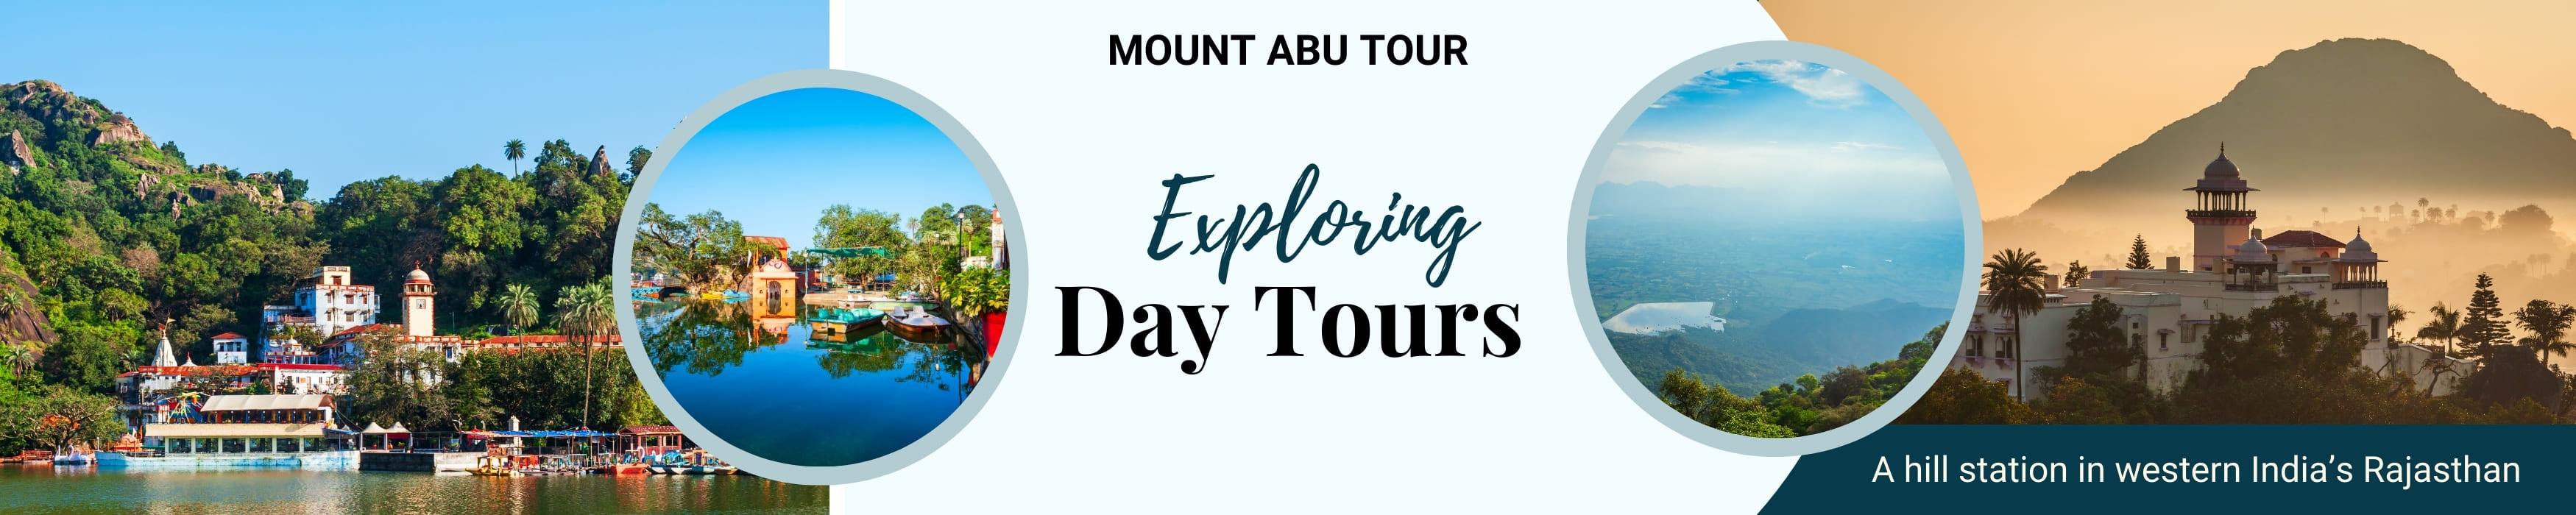 Mount Abu Tour